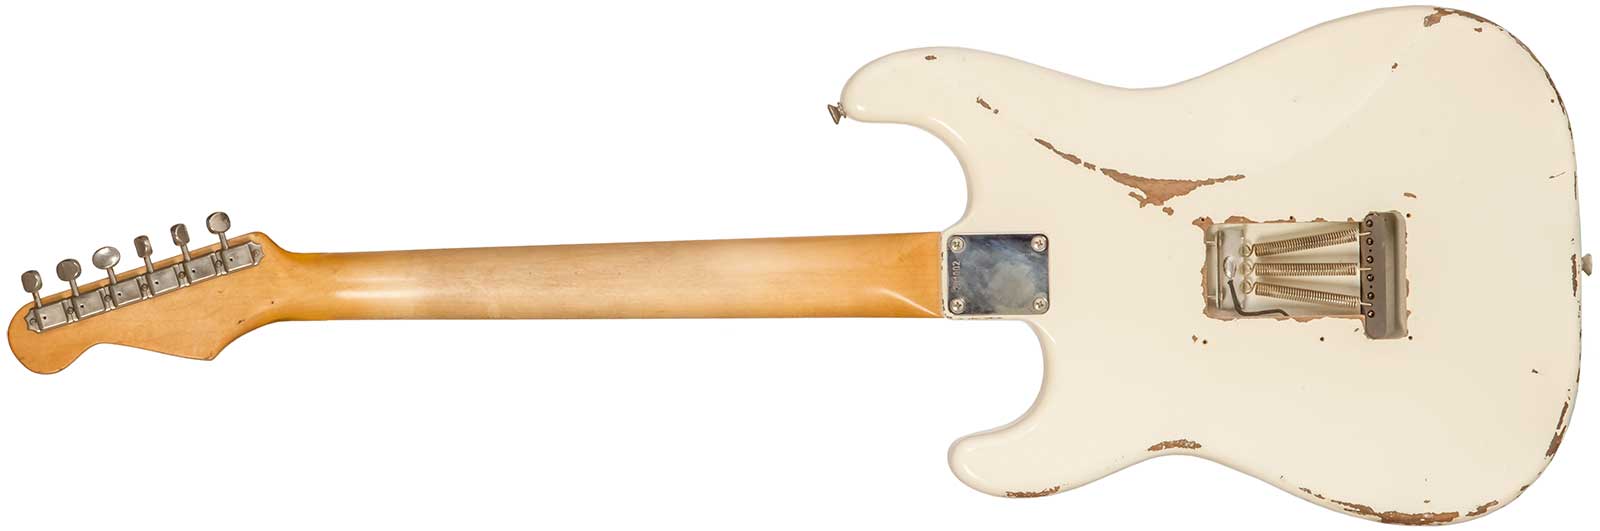 Rebelrelic S-series 1962 3s Trem Rw #231002 - Olympic White - Guitarra eléctrica con forma de str. - Variation 1